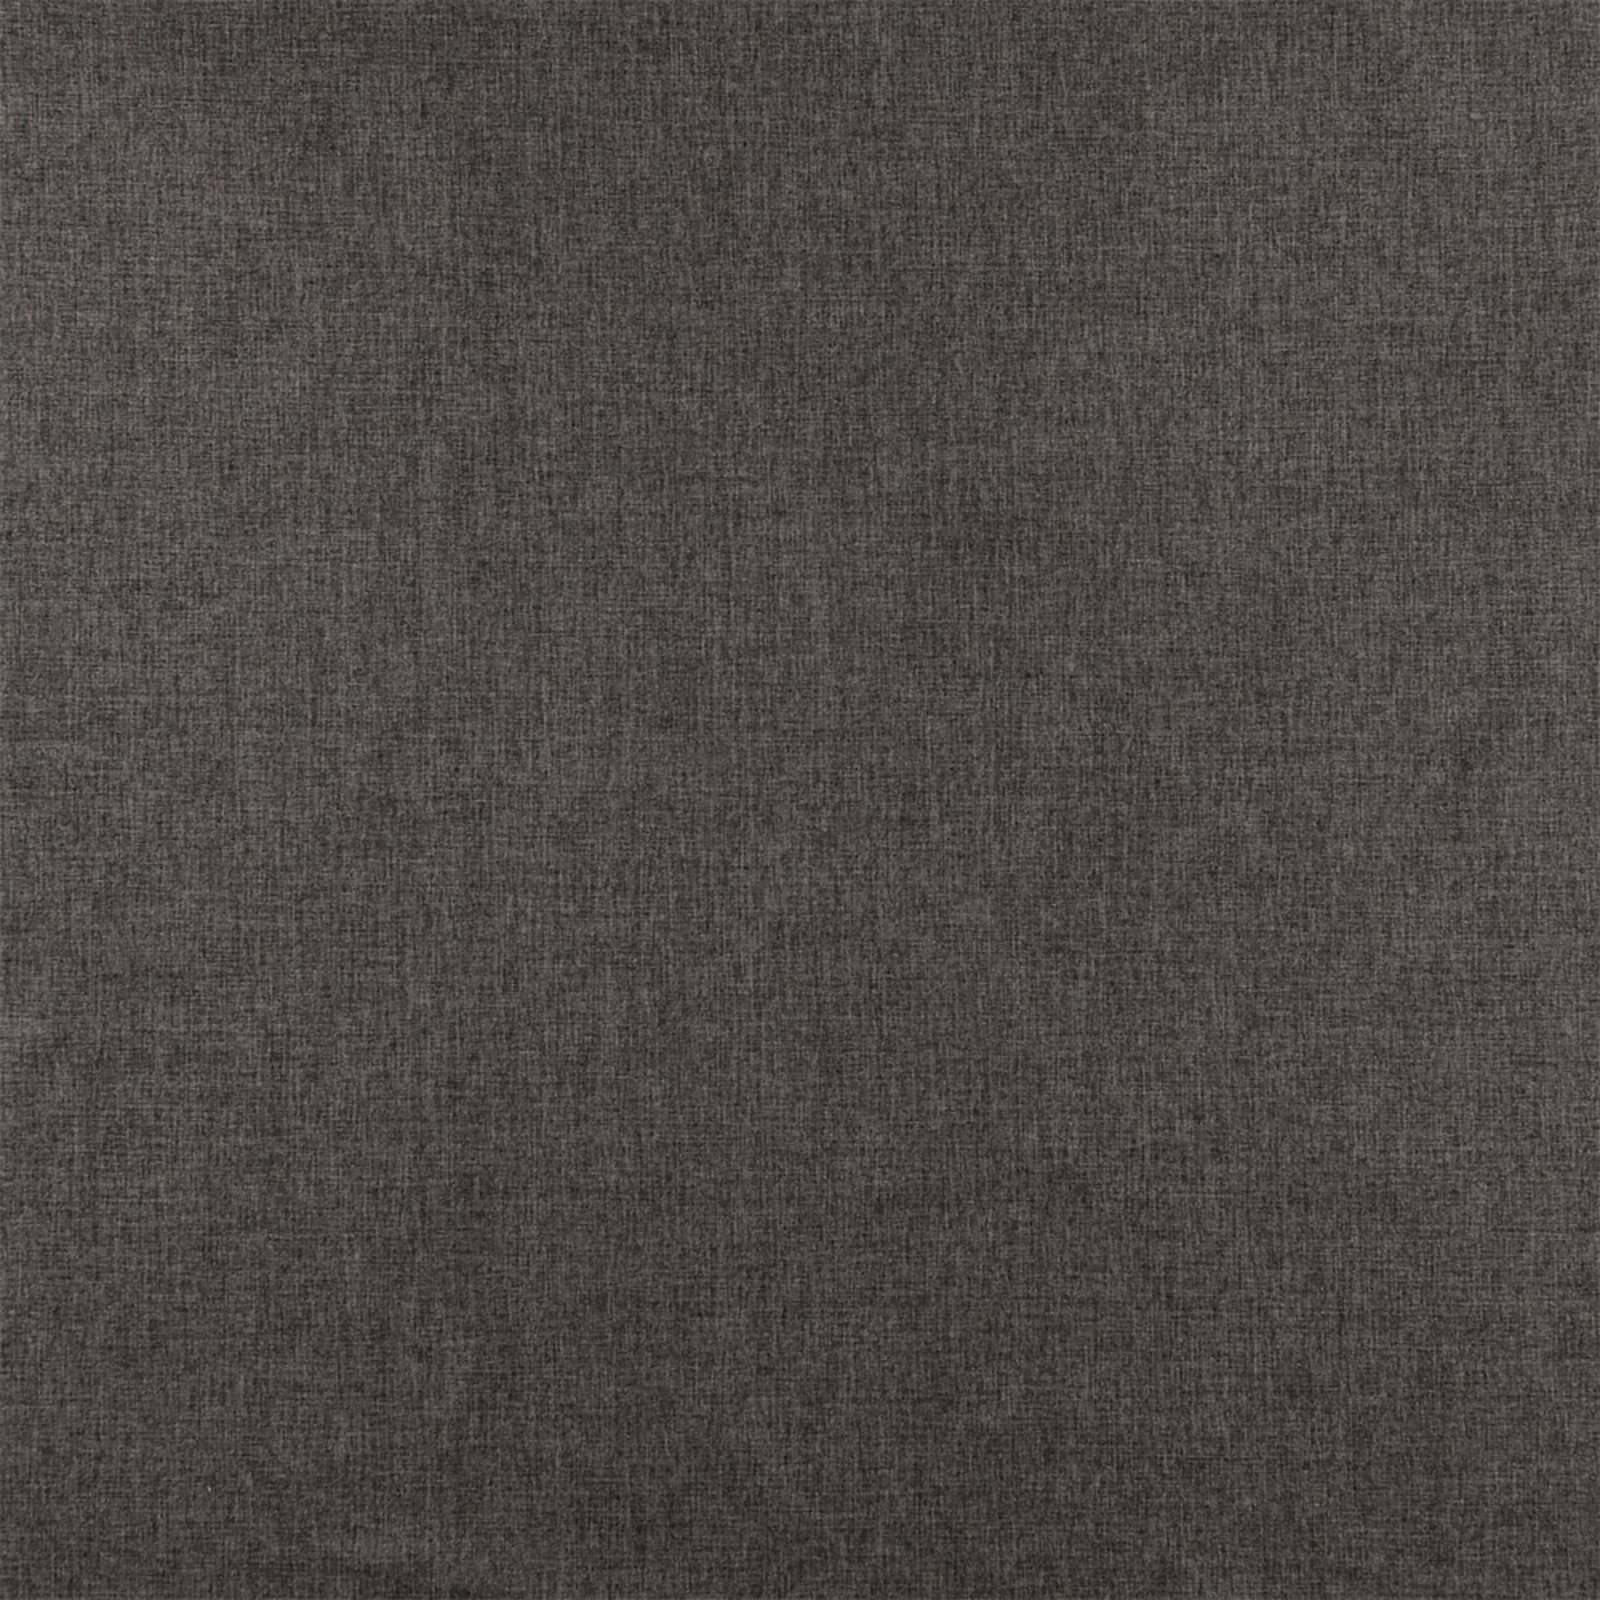 Upholstery texture dark grey/black 822161_pack_sp